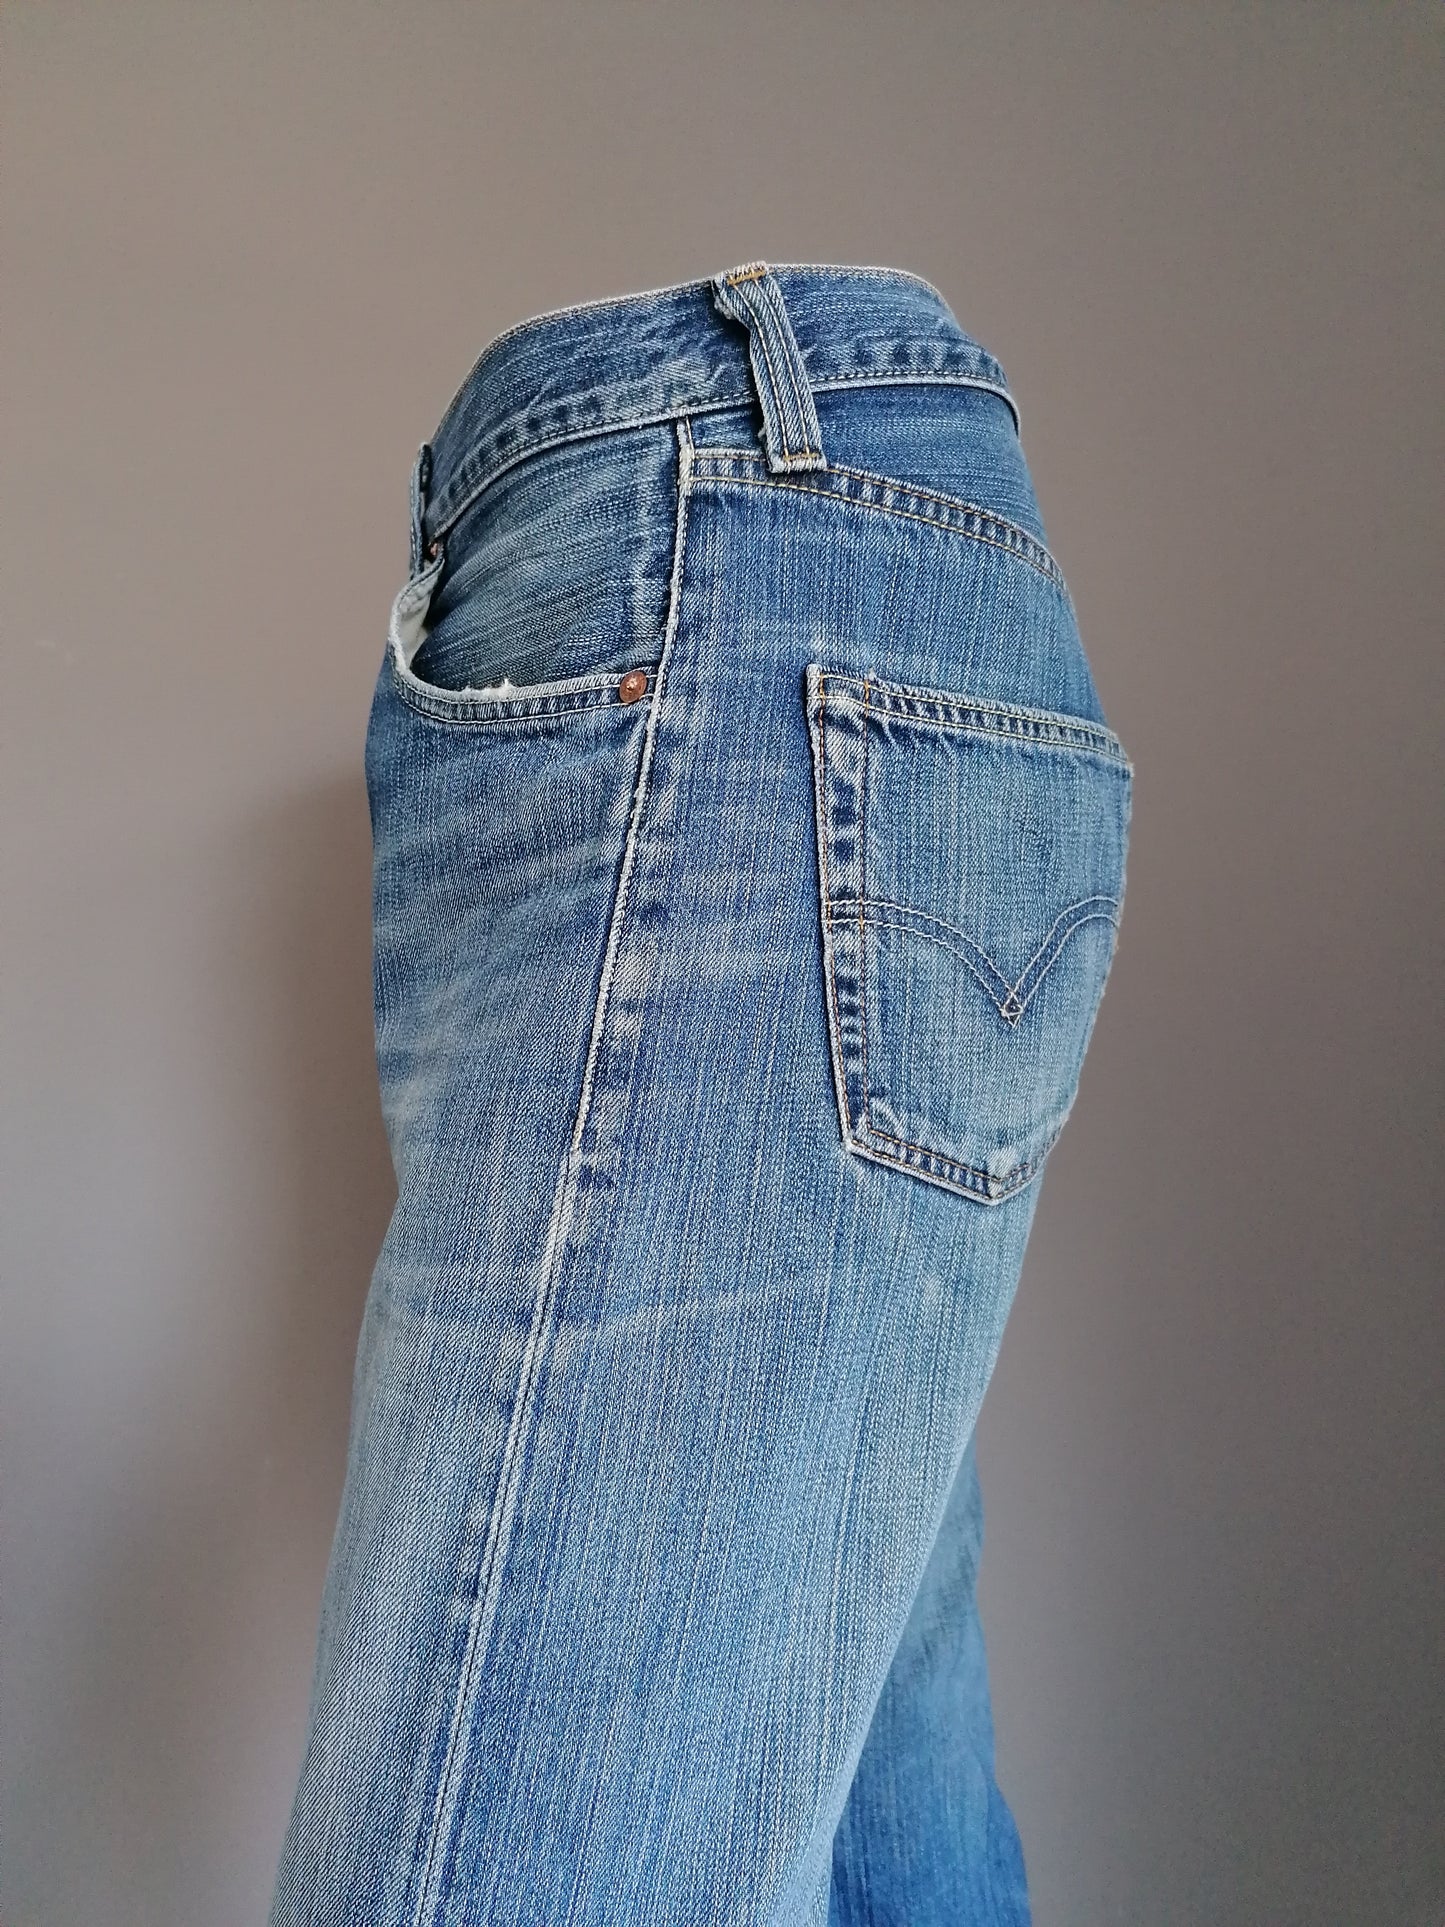 Los jeans 501 de Levi. 1947 LIMITADO. Azul de color. W32 - L30.